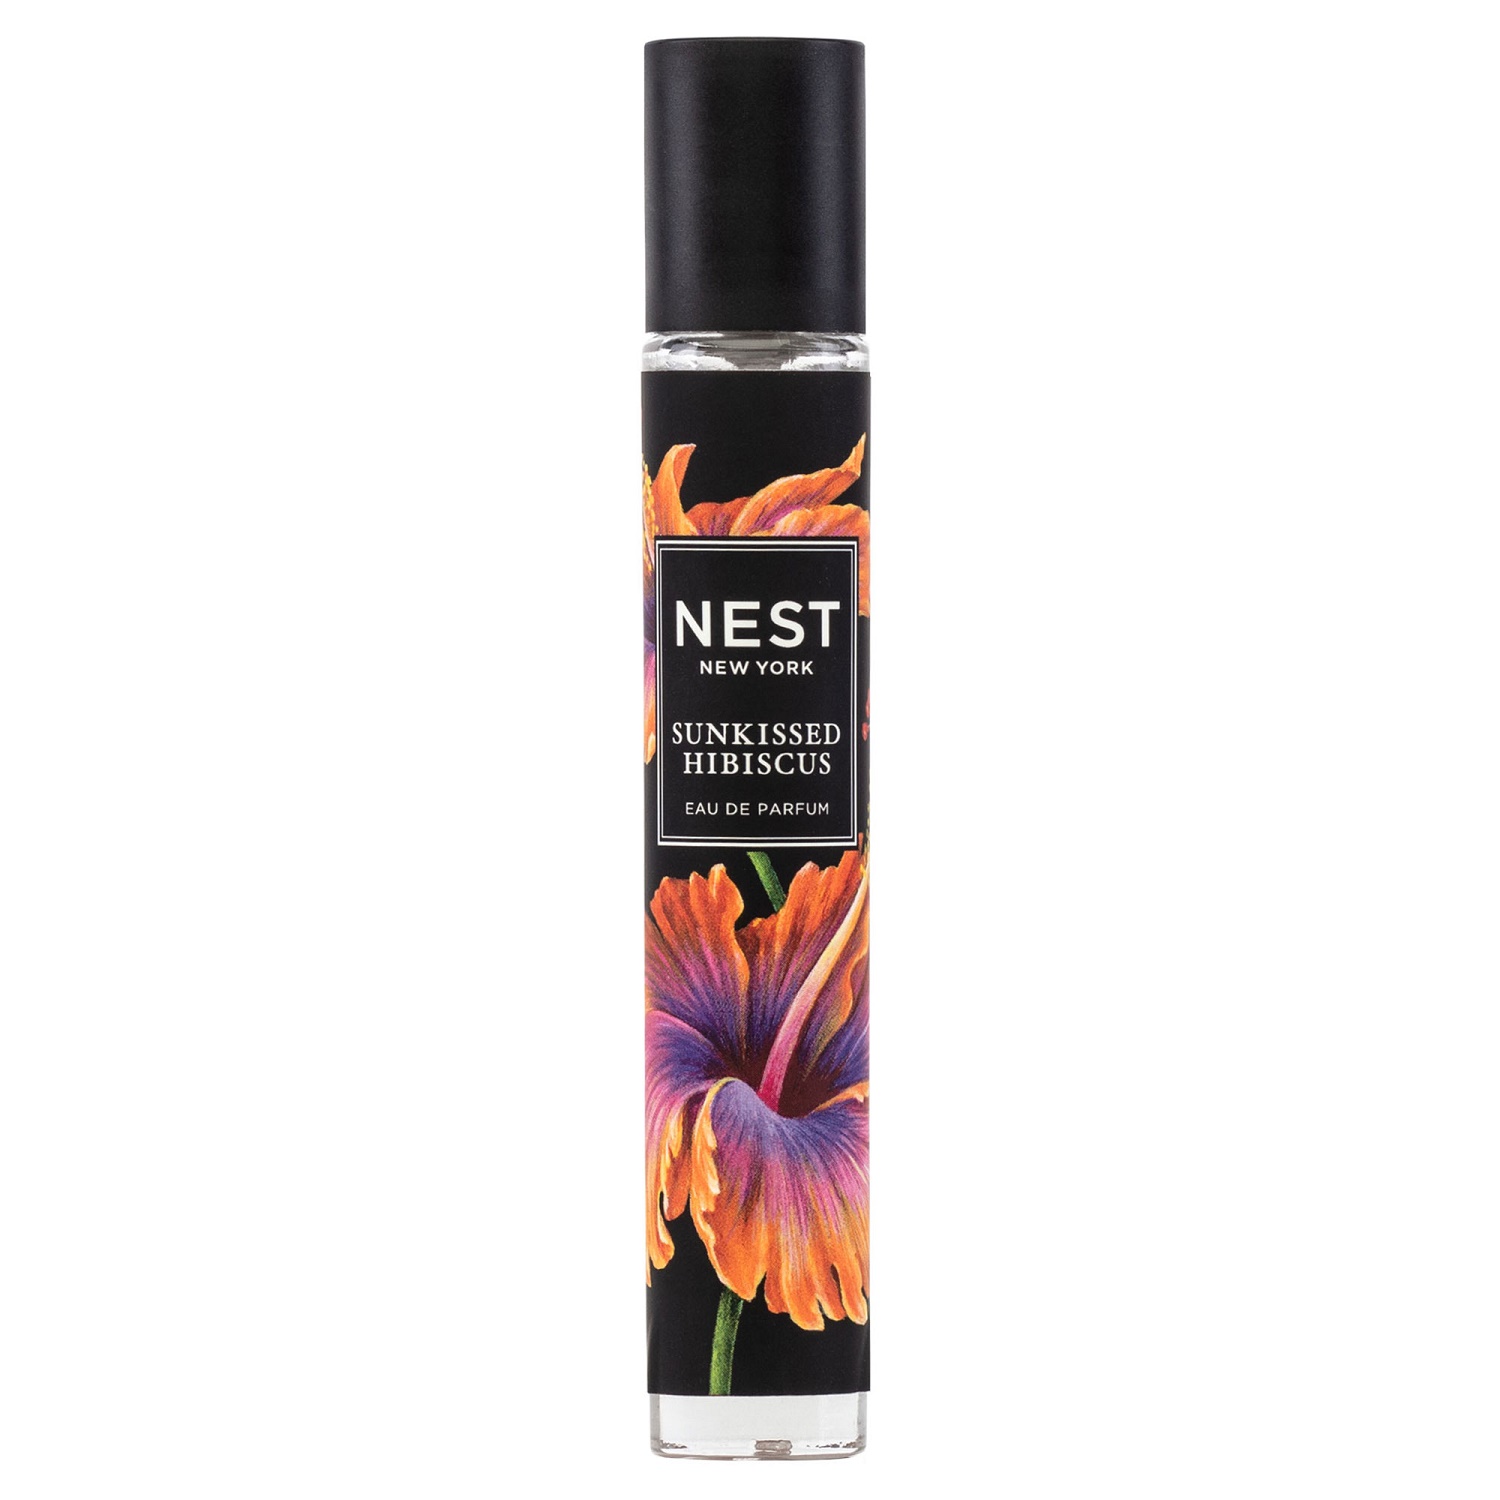 sunkissed hibiscus travel spray